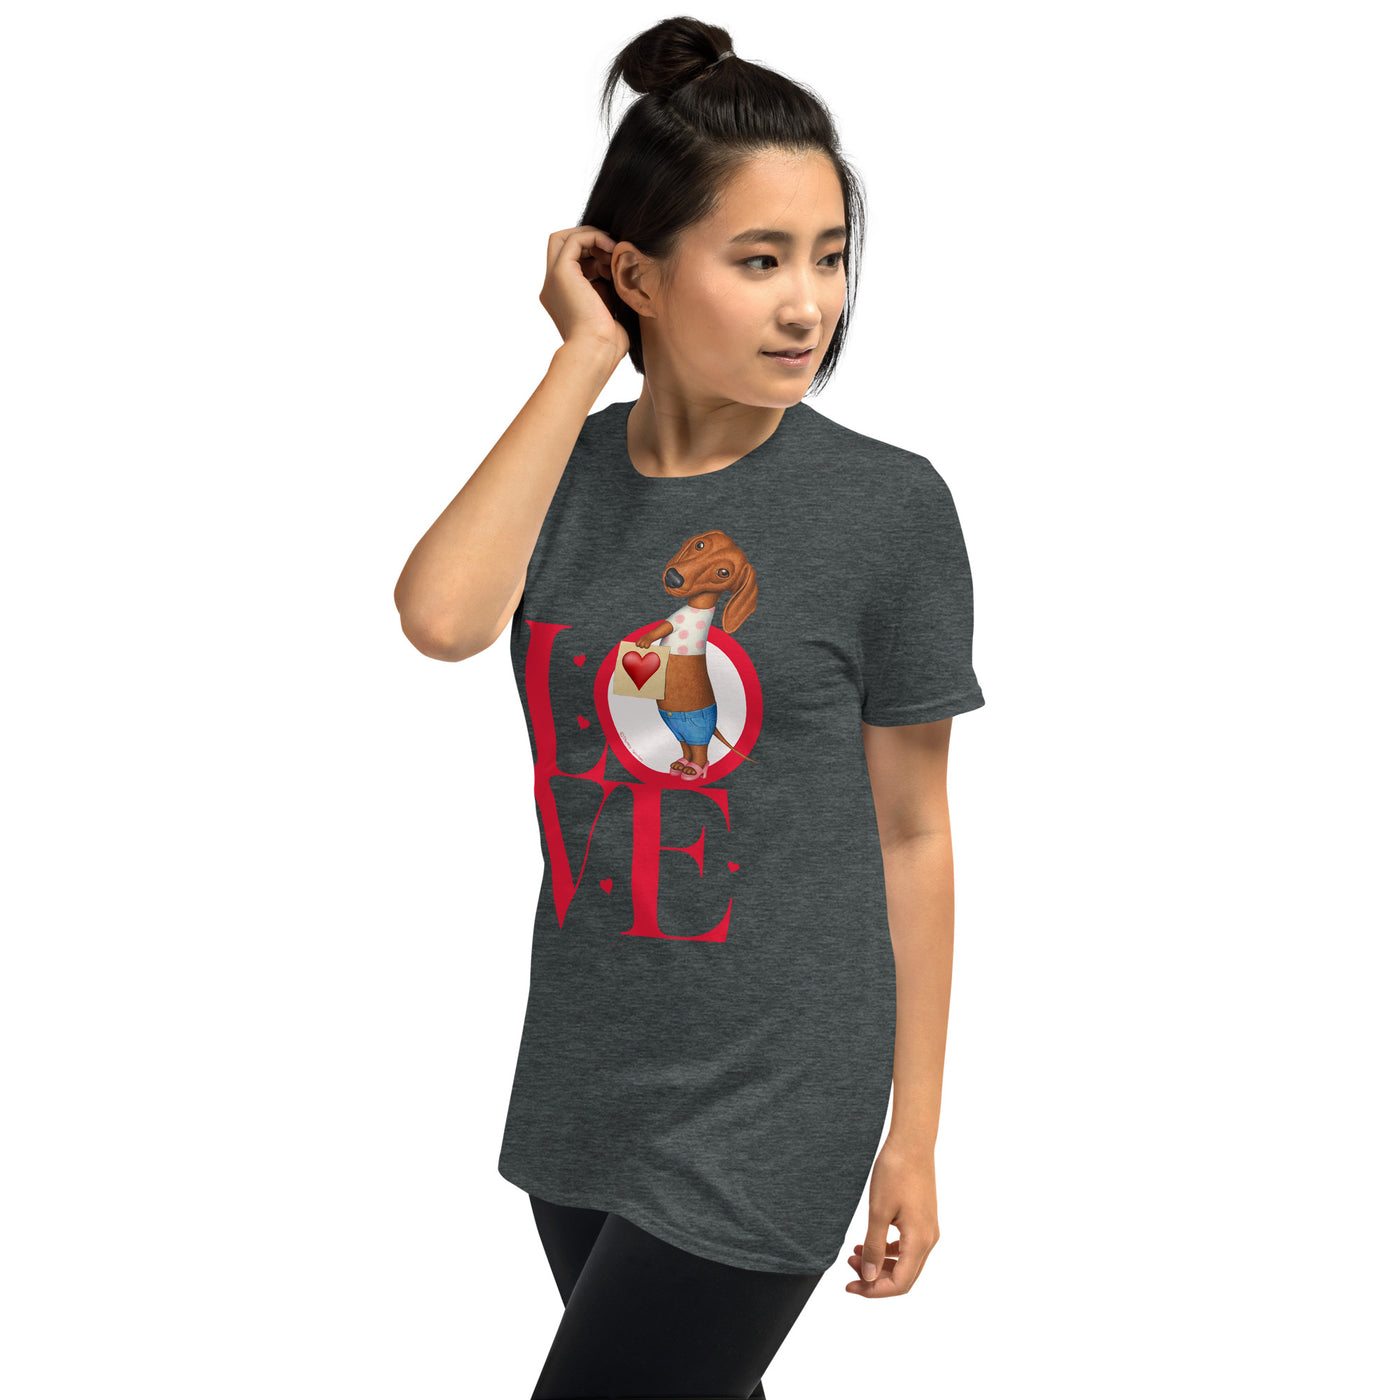 Cute Doxie Dog on funny design Dachshund Love Unisex T-Shirt